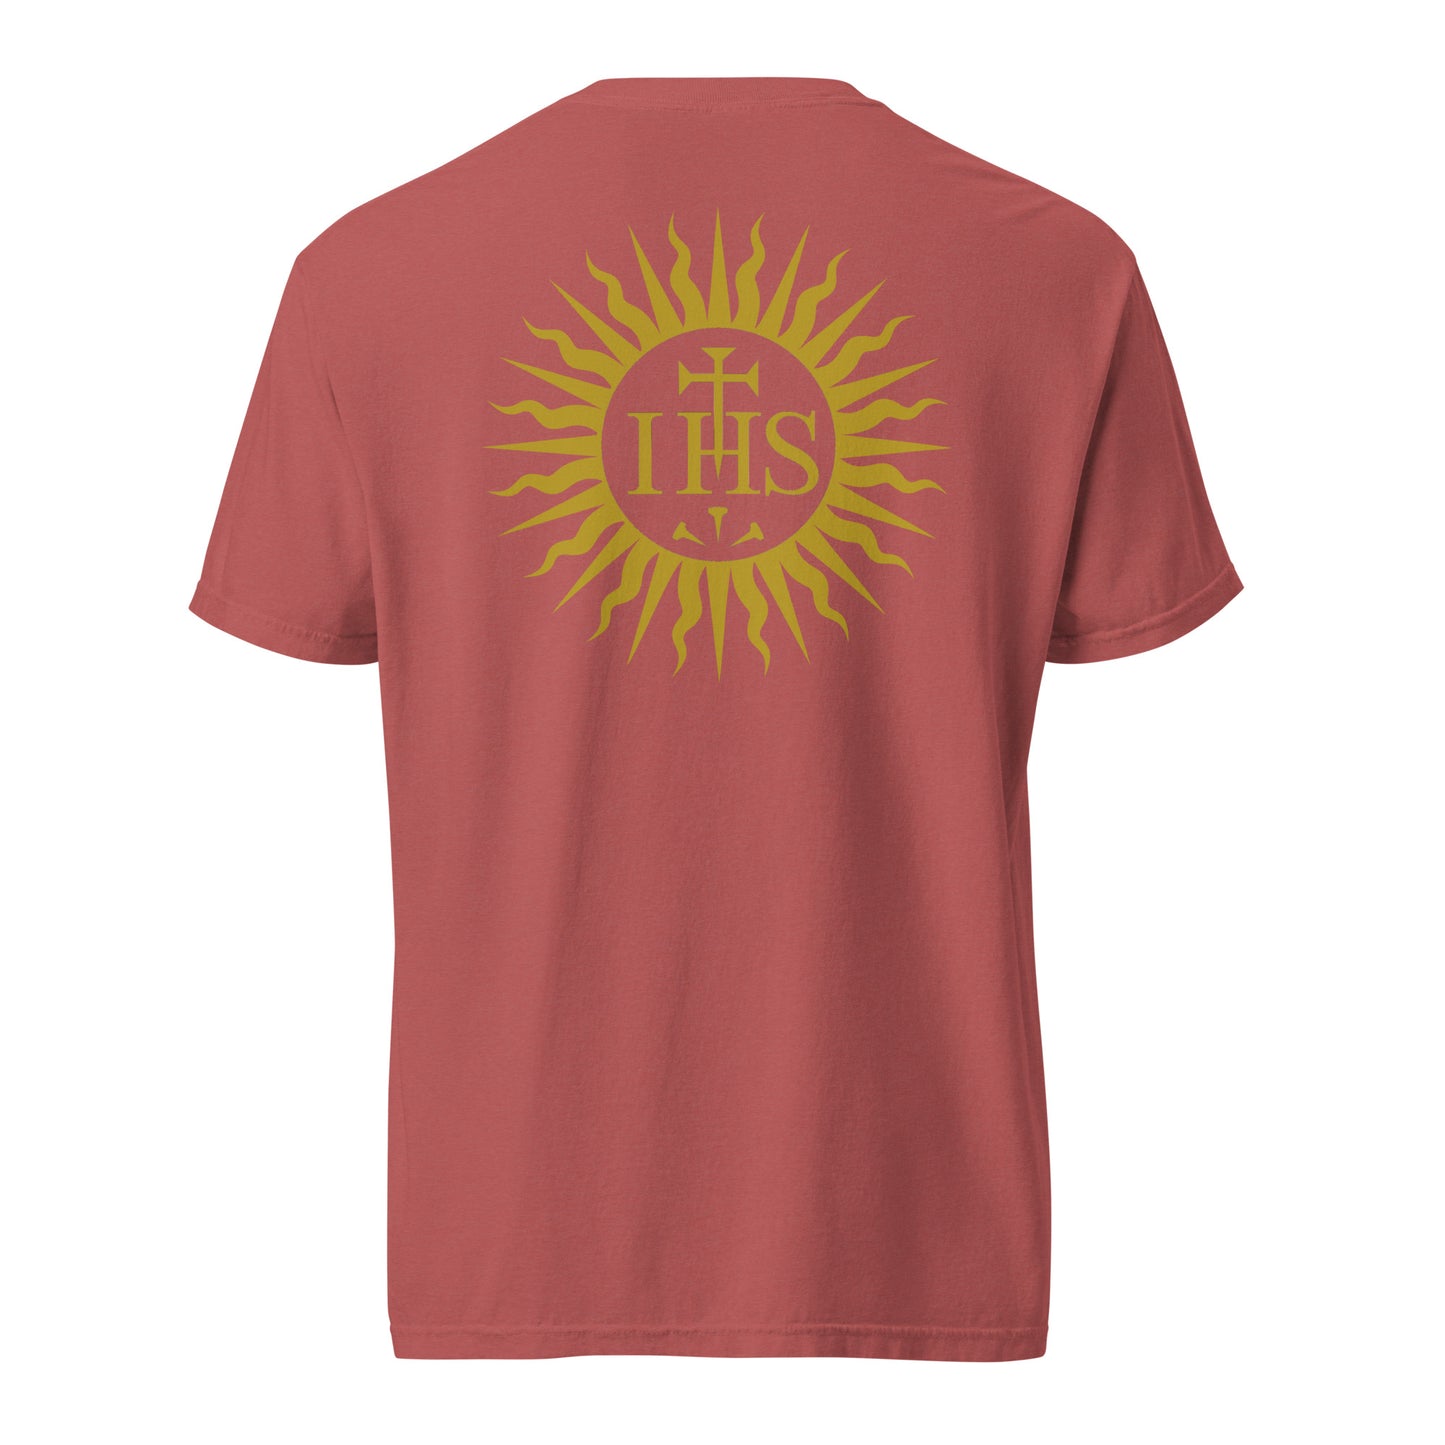 IHS - Jesus - Unisex garment-dyed heavyweight t-shirt